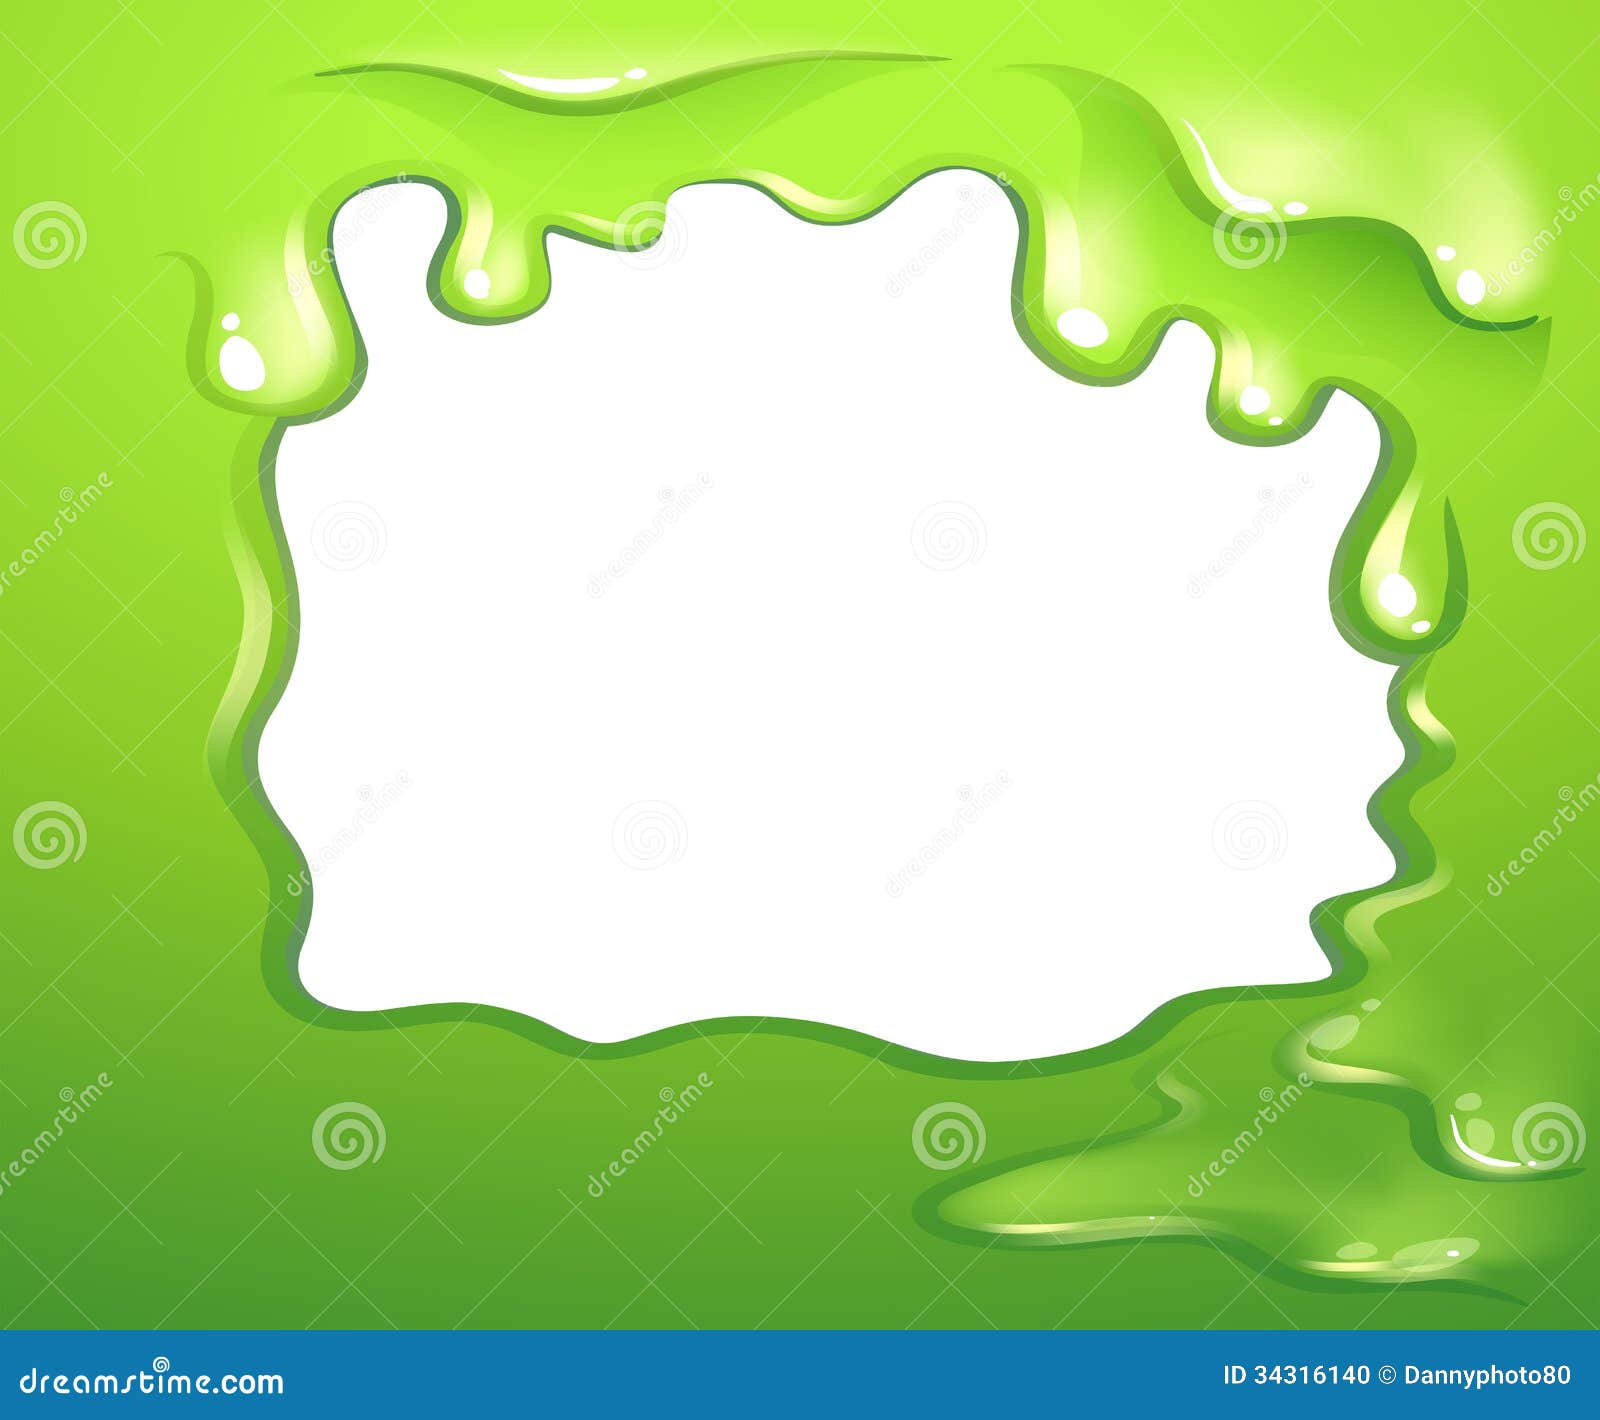 green-border-design-illustration-34316140.jpg